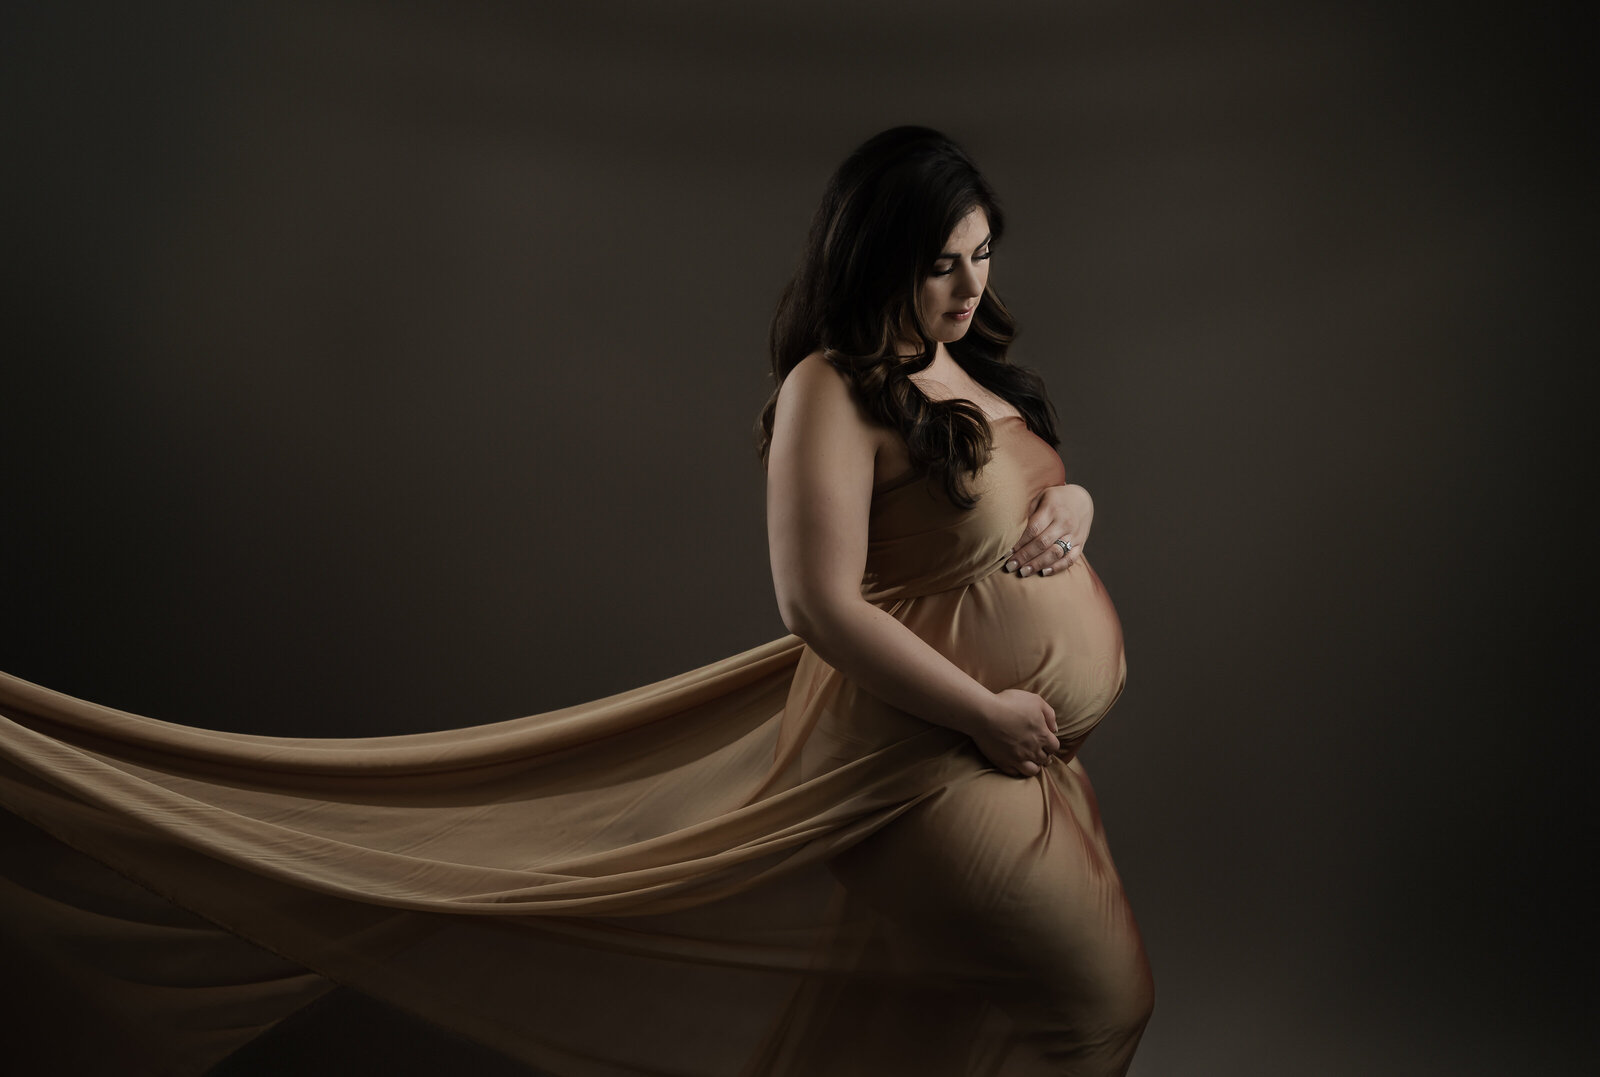 Atlanta Maternity Photographer doing fine art studio images